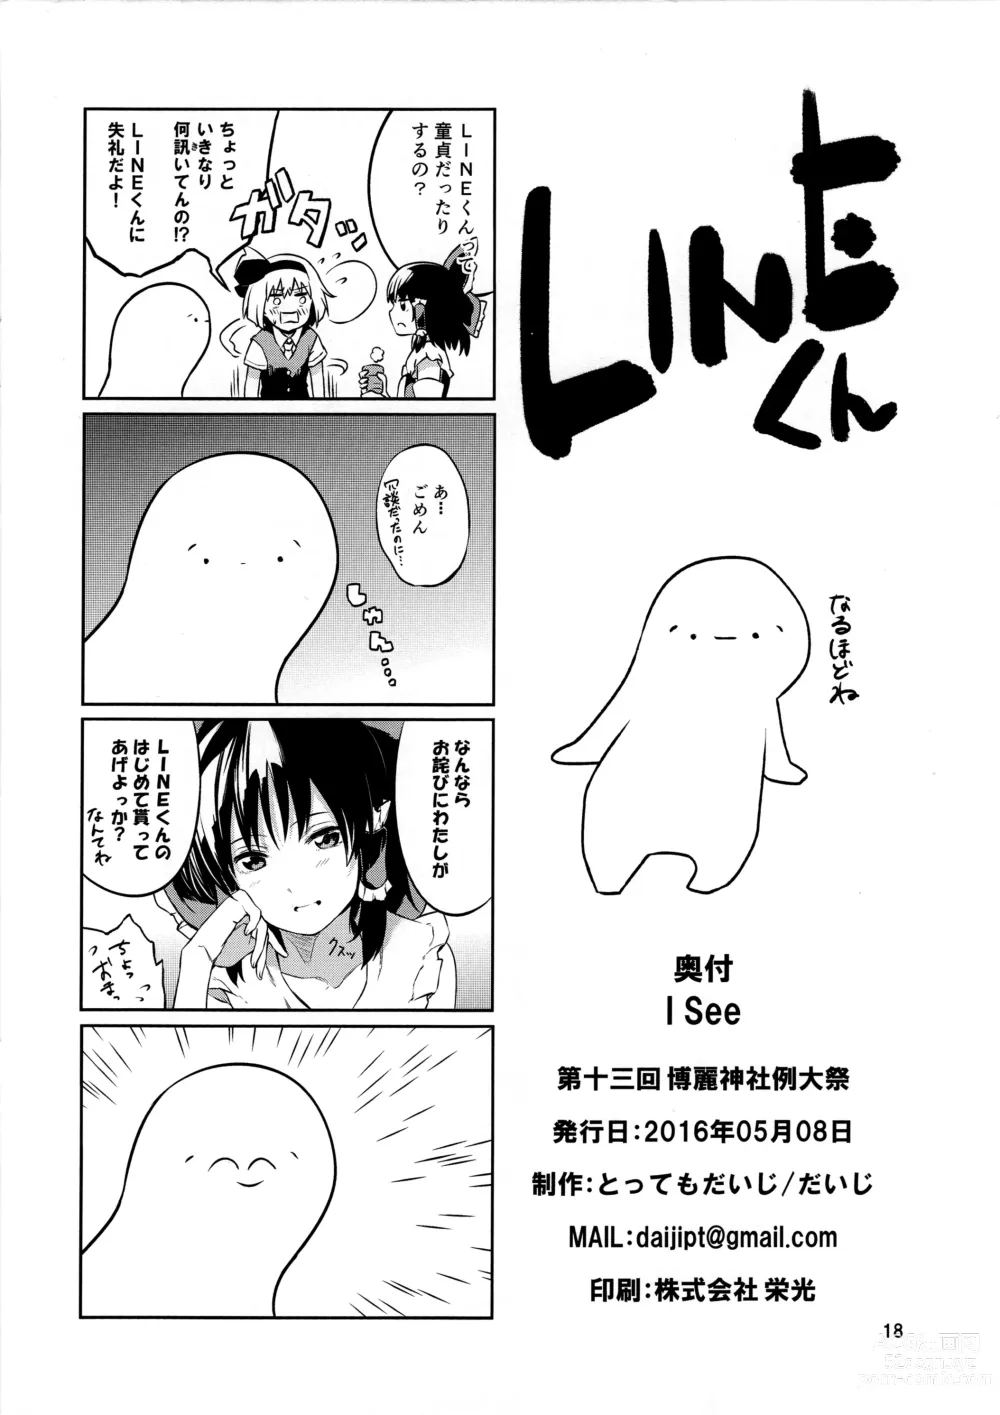 Page 17 of doujinshi I SEE